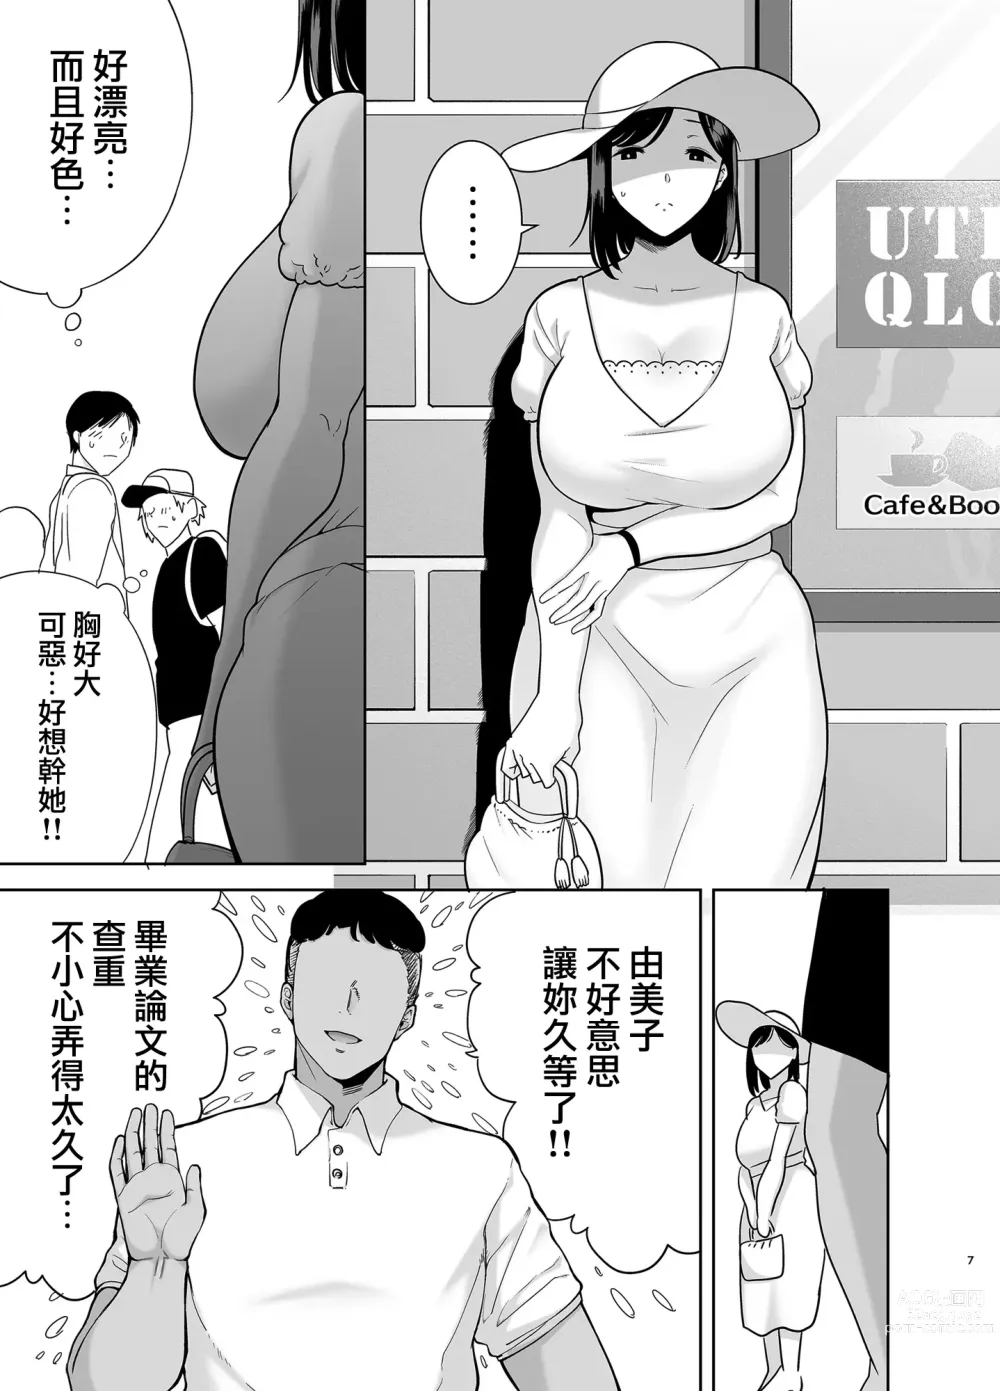 Page 7 of manga 夏妻2 ～夏～旅館～ナンパ男達に堕ちた妻～